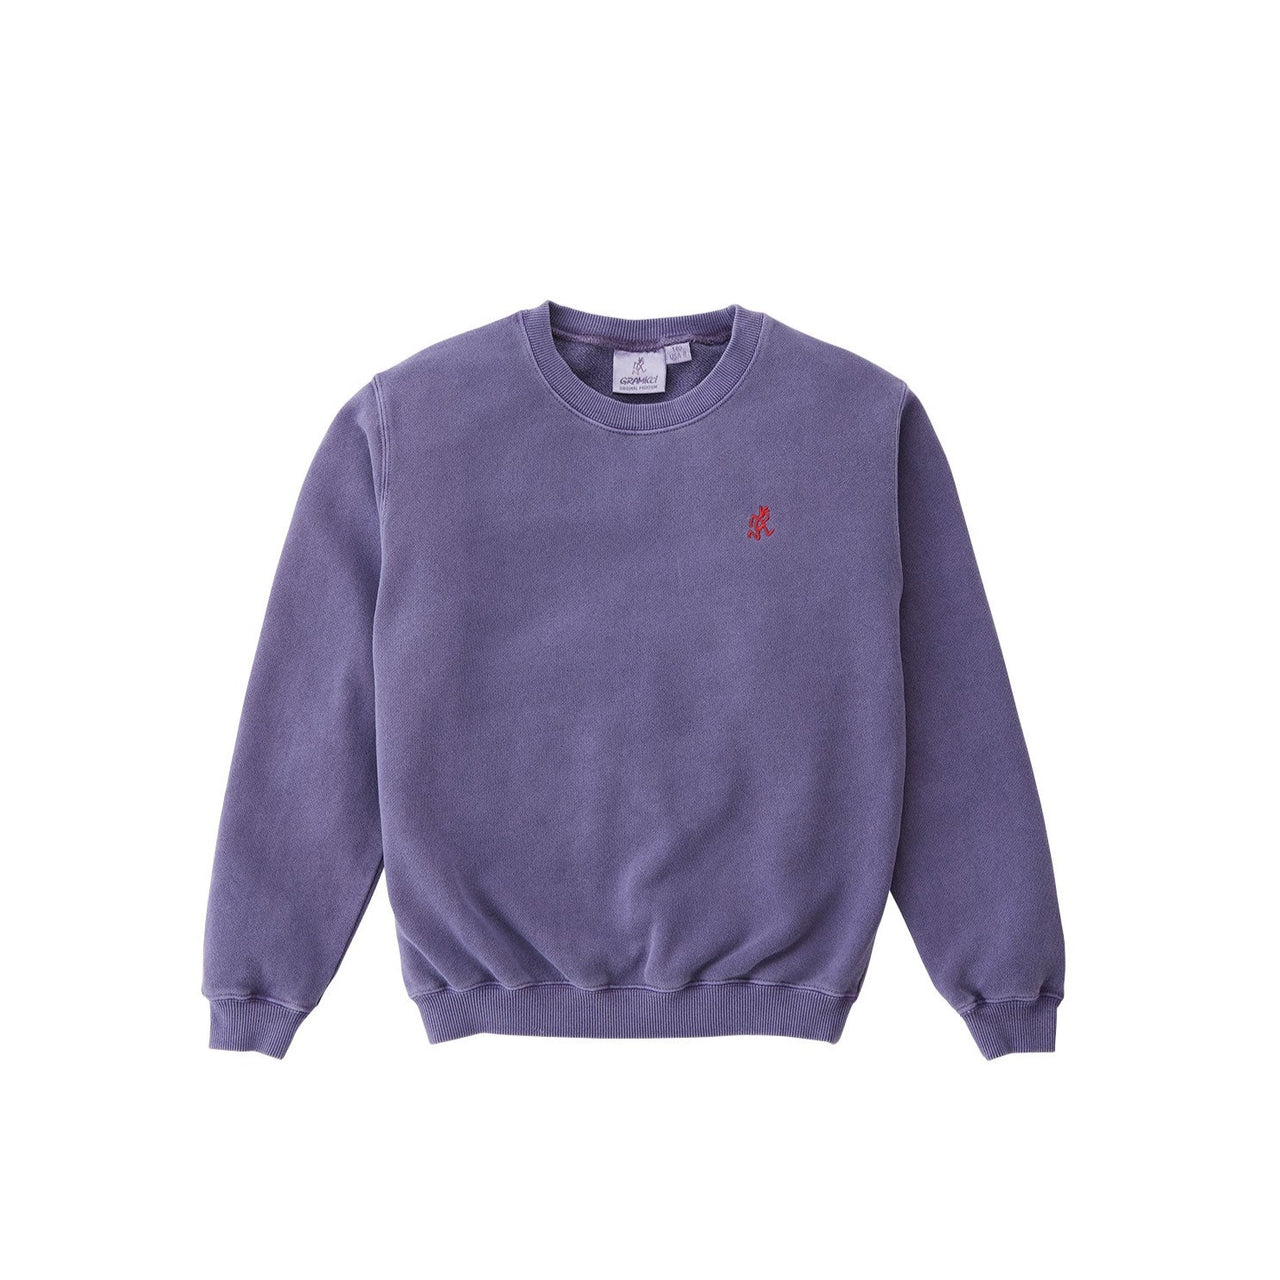 Drake General Store - Gramicci Kids One Point Sweatshirt - Purple Pigment